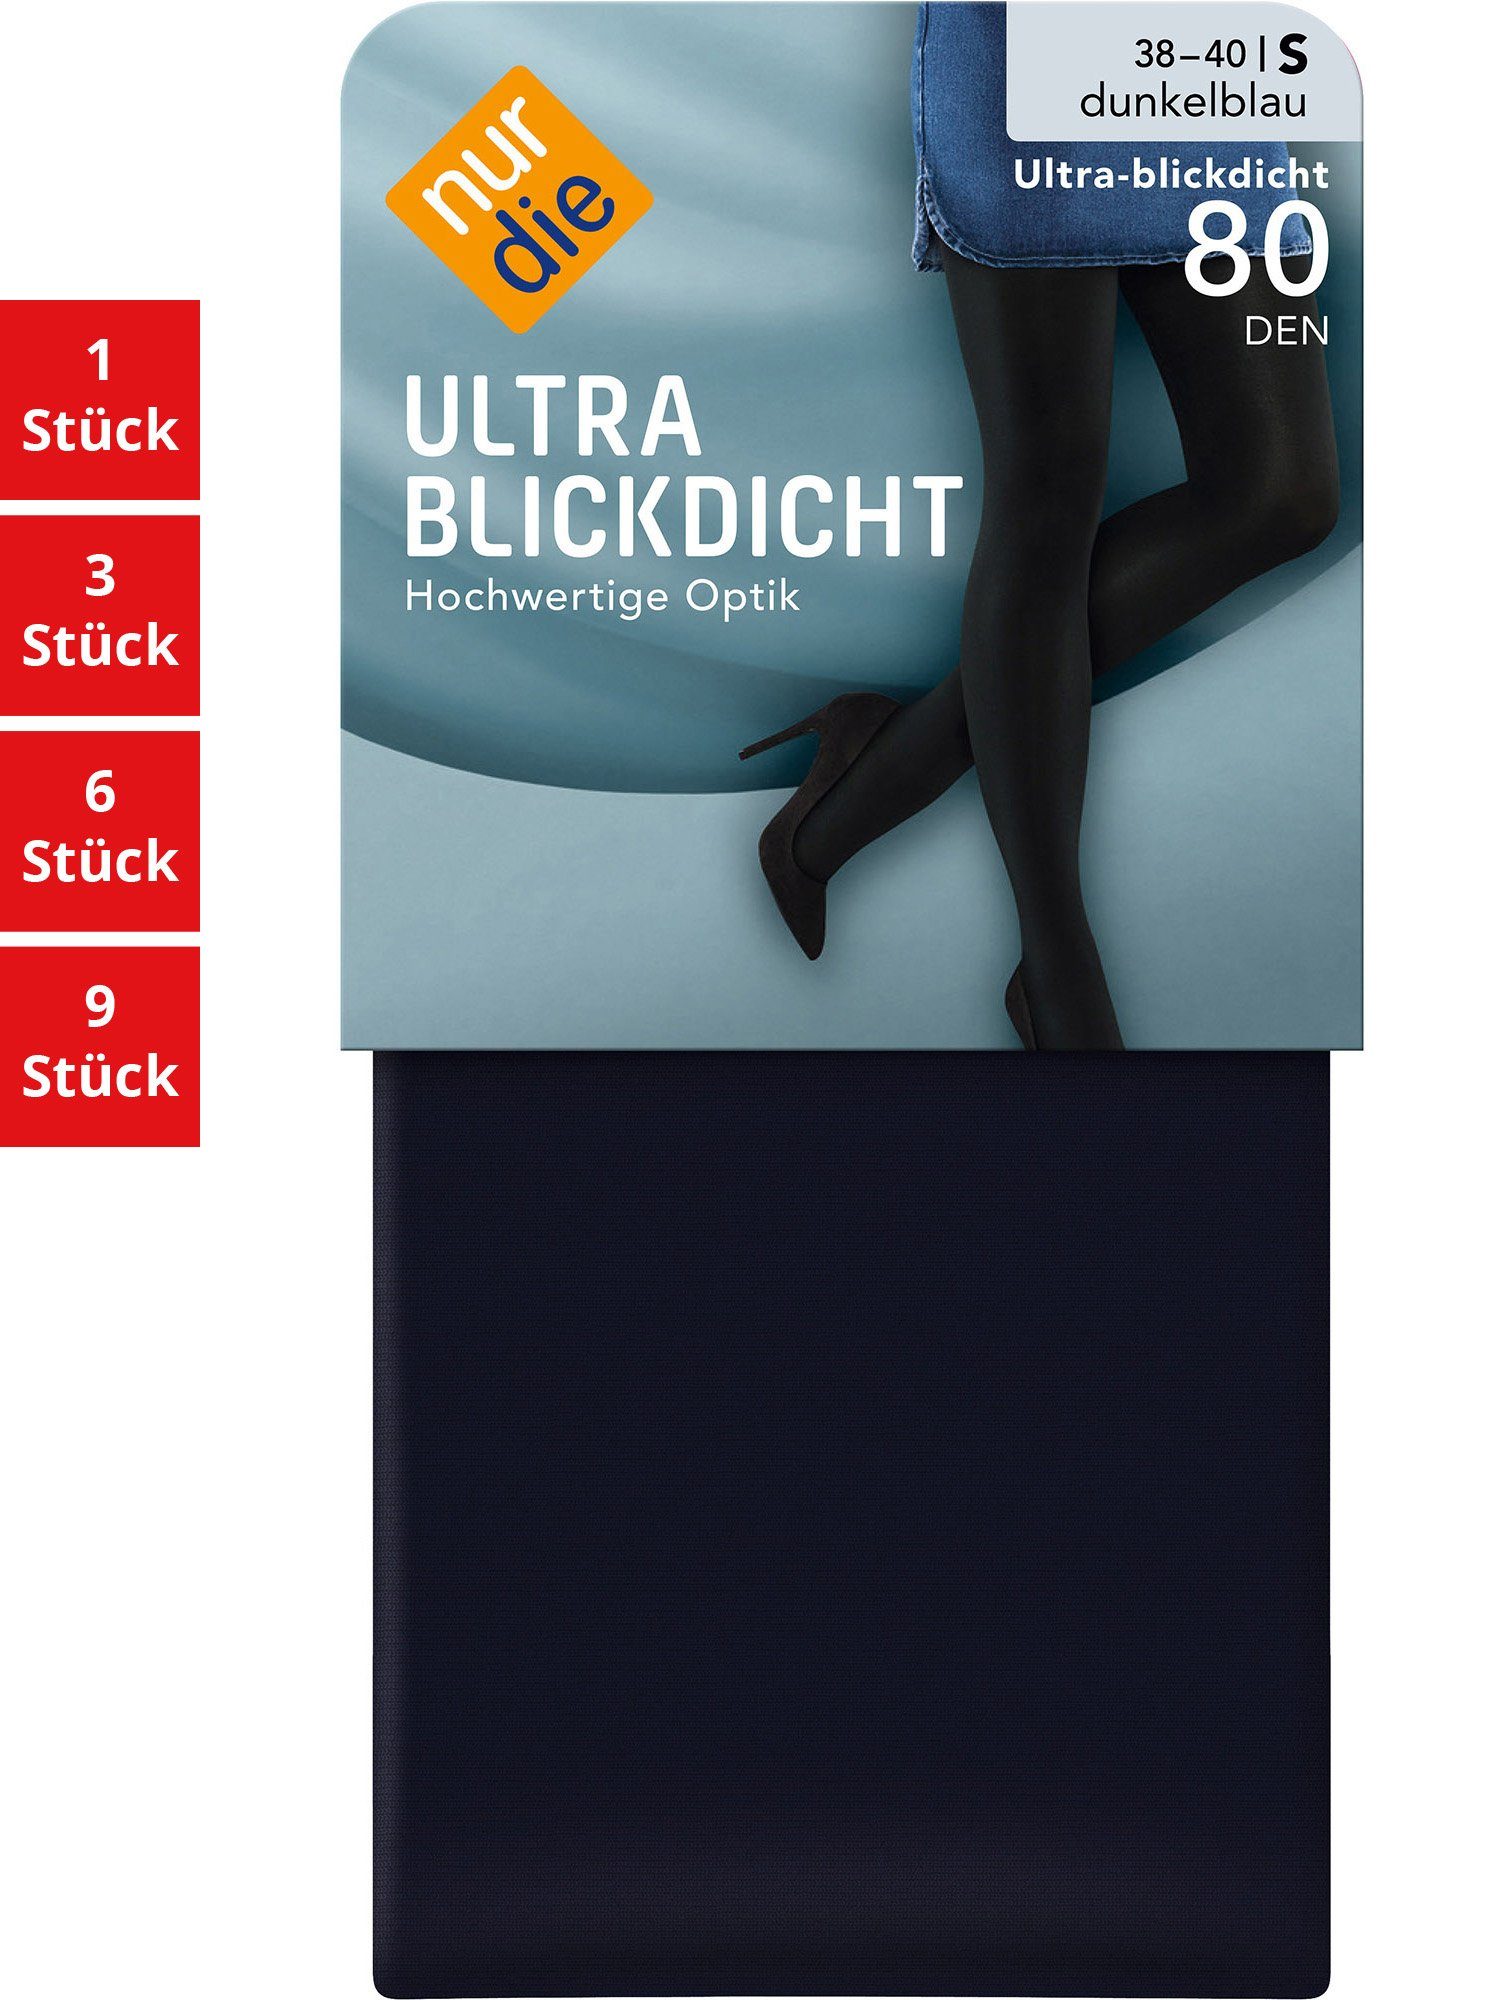 opaque multi-pack Pack Damen Feinstrumpfhose Ultra DEN 1 frauen blickdicht Blickdicht (1er/3er/6er/9er St) dunkelblau 80 nylon softbund Fein-strumpfhose Die Nur